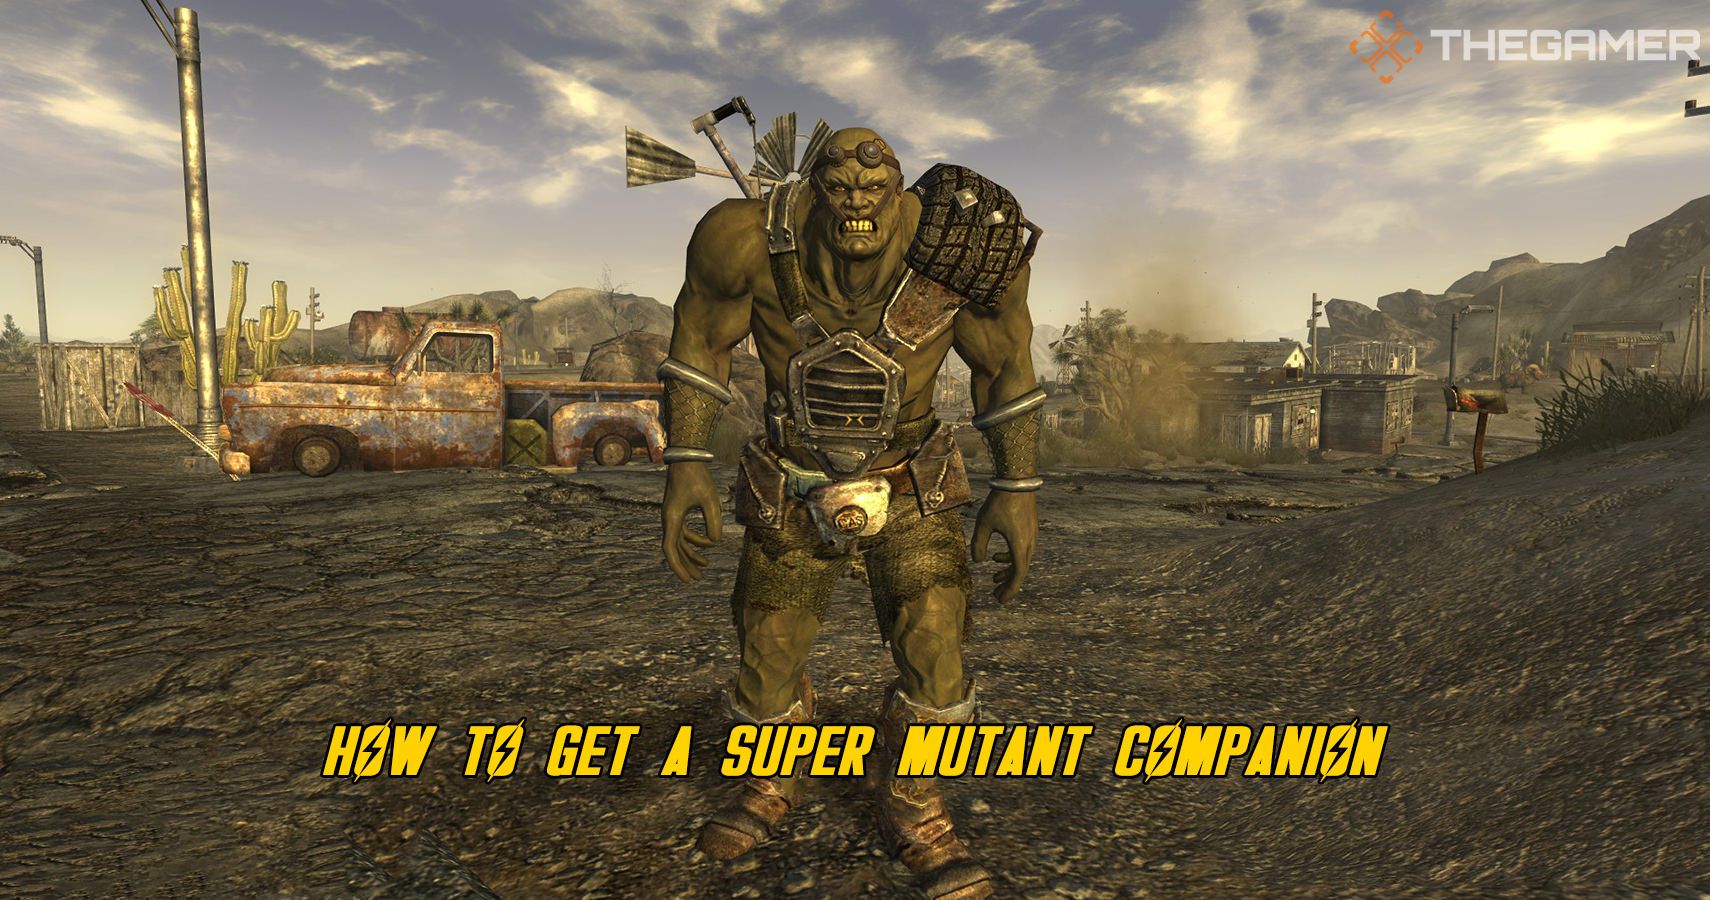 Fallout New Vegas Companion Guide